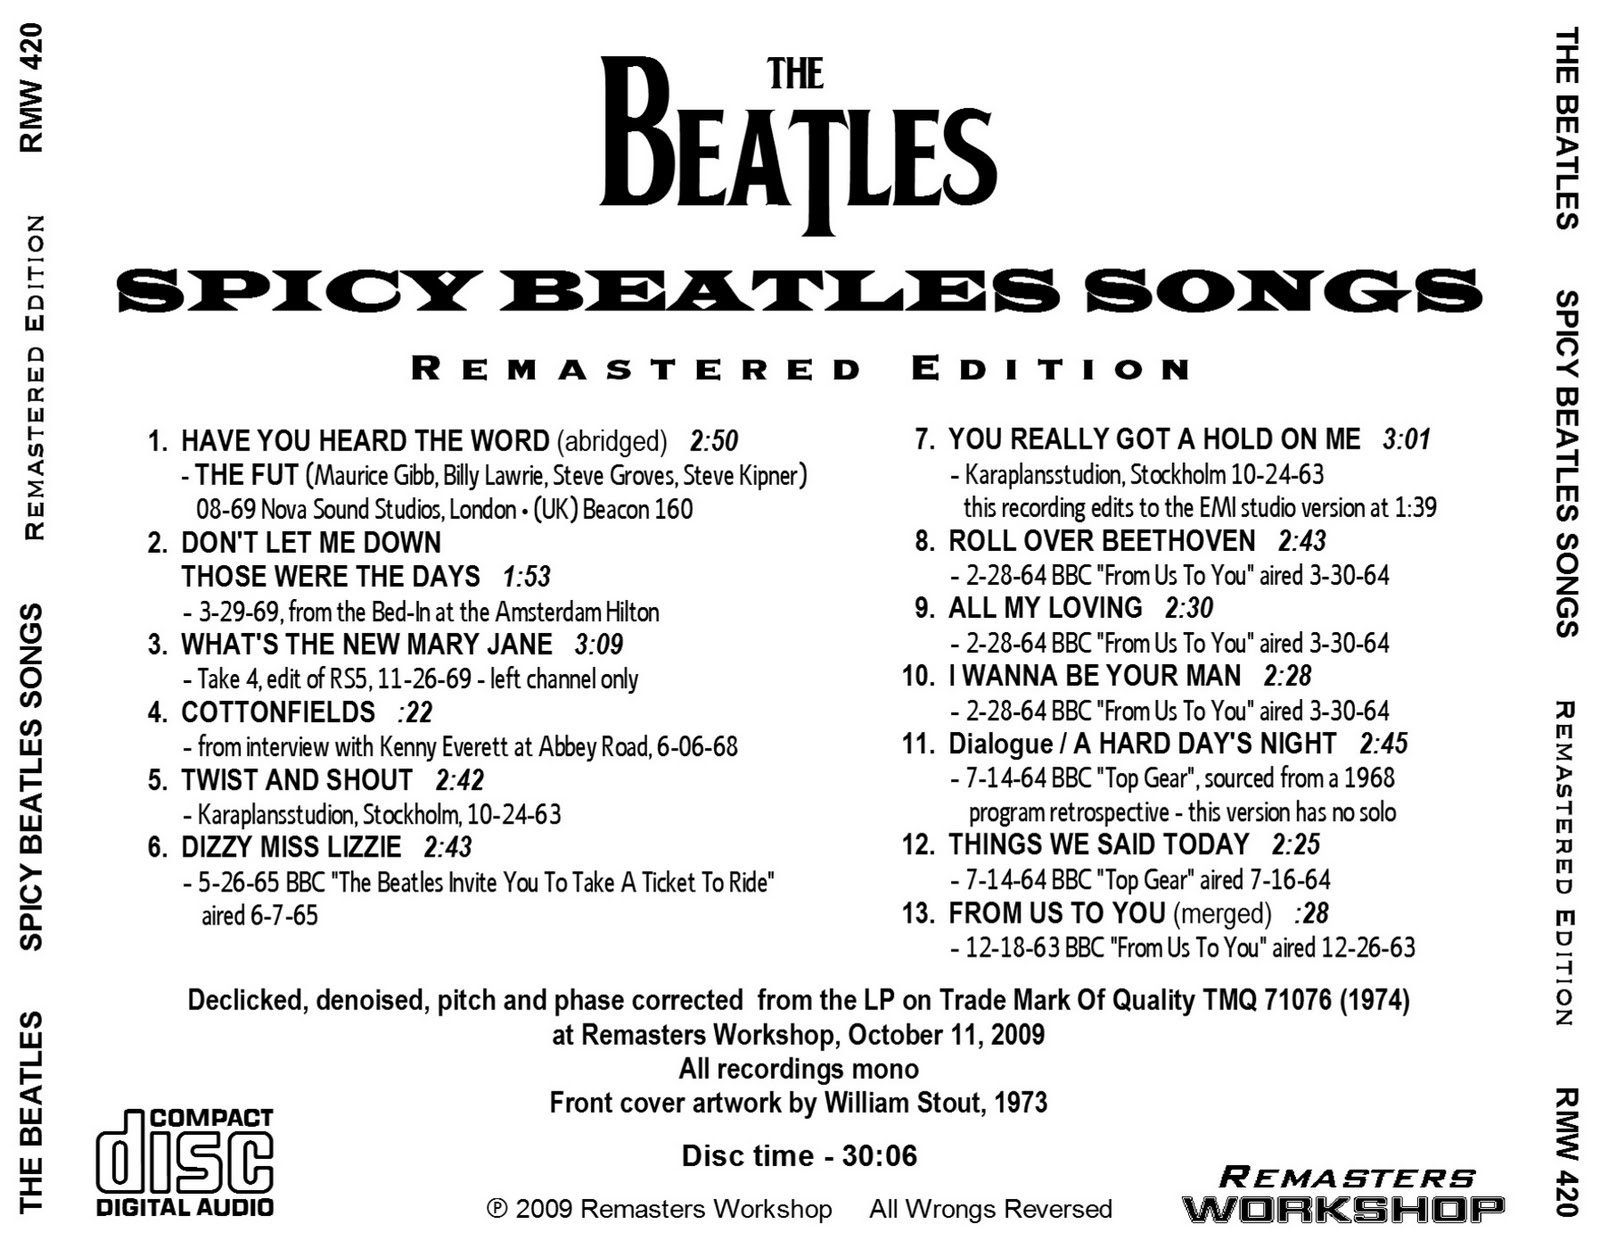 The beatles перевод песен. Список песен the Beatles. Песни Битлз список. Тексты песен Beatles. Синглы the Beatles.